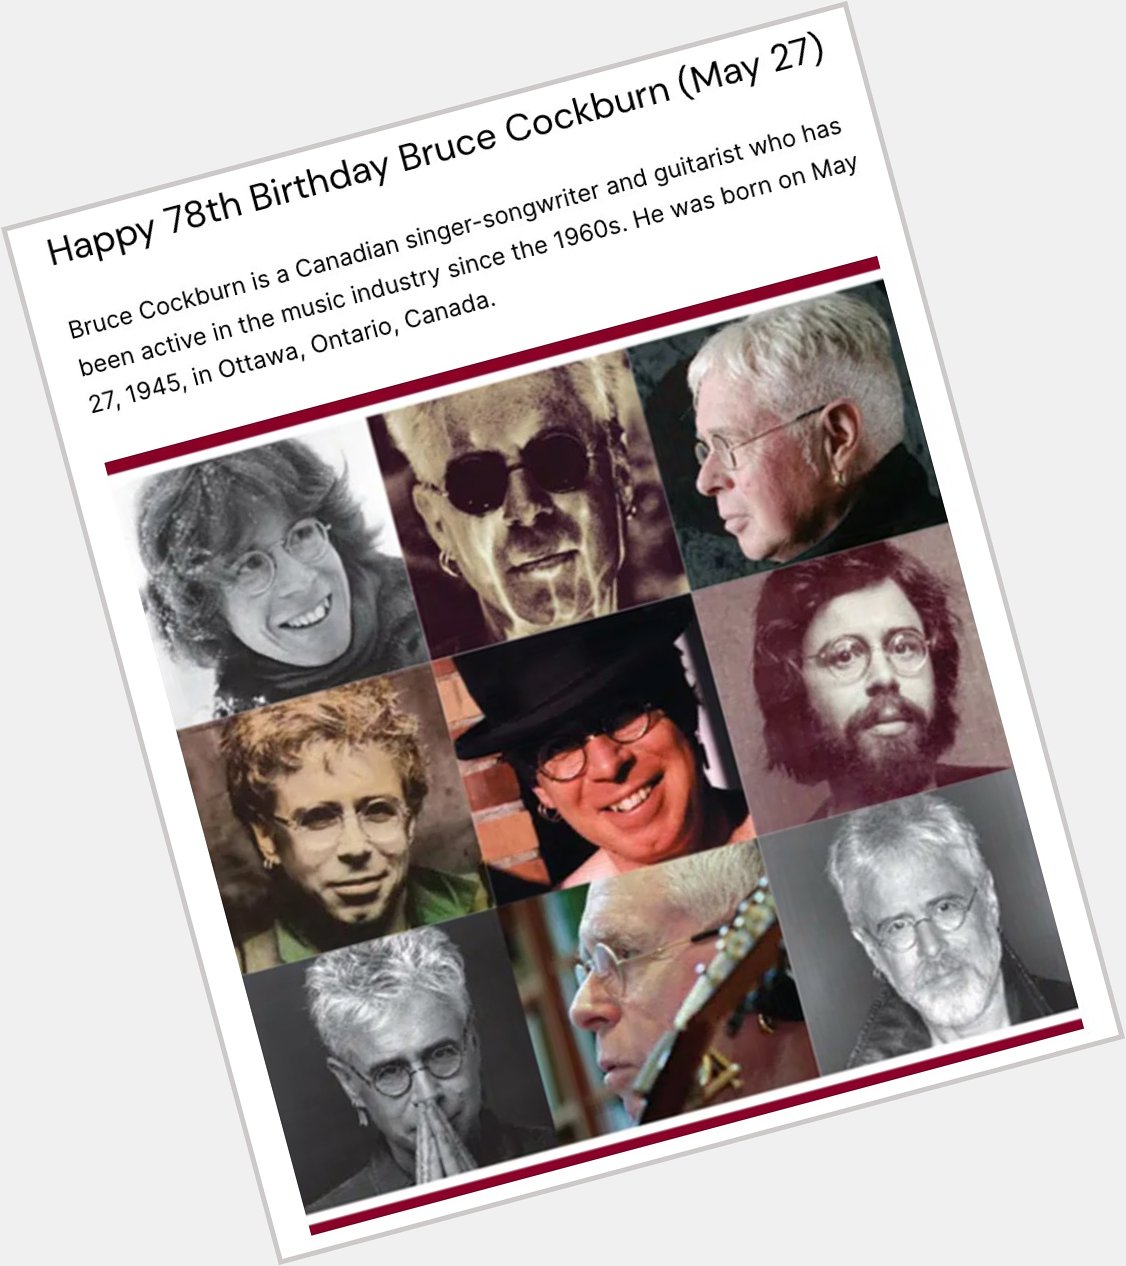 Happy 78th Birthday Bruce Cockburn (May 27)    